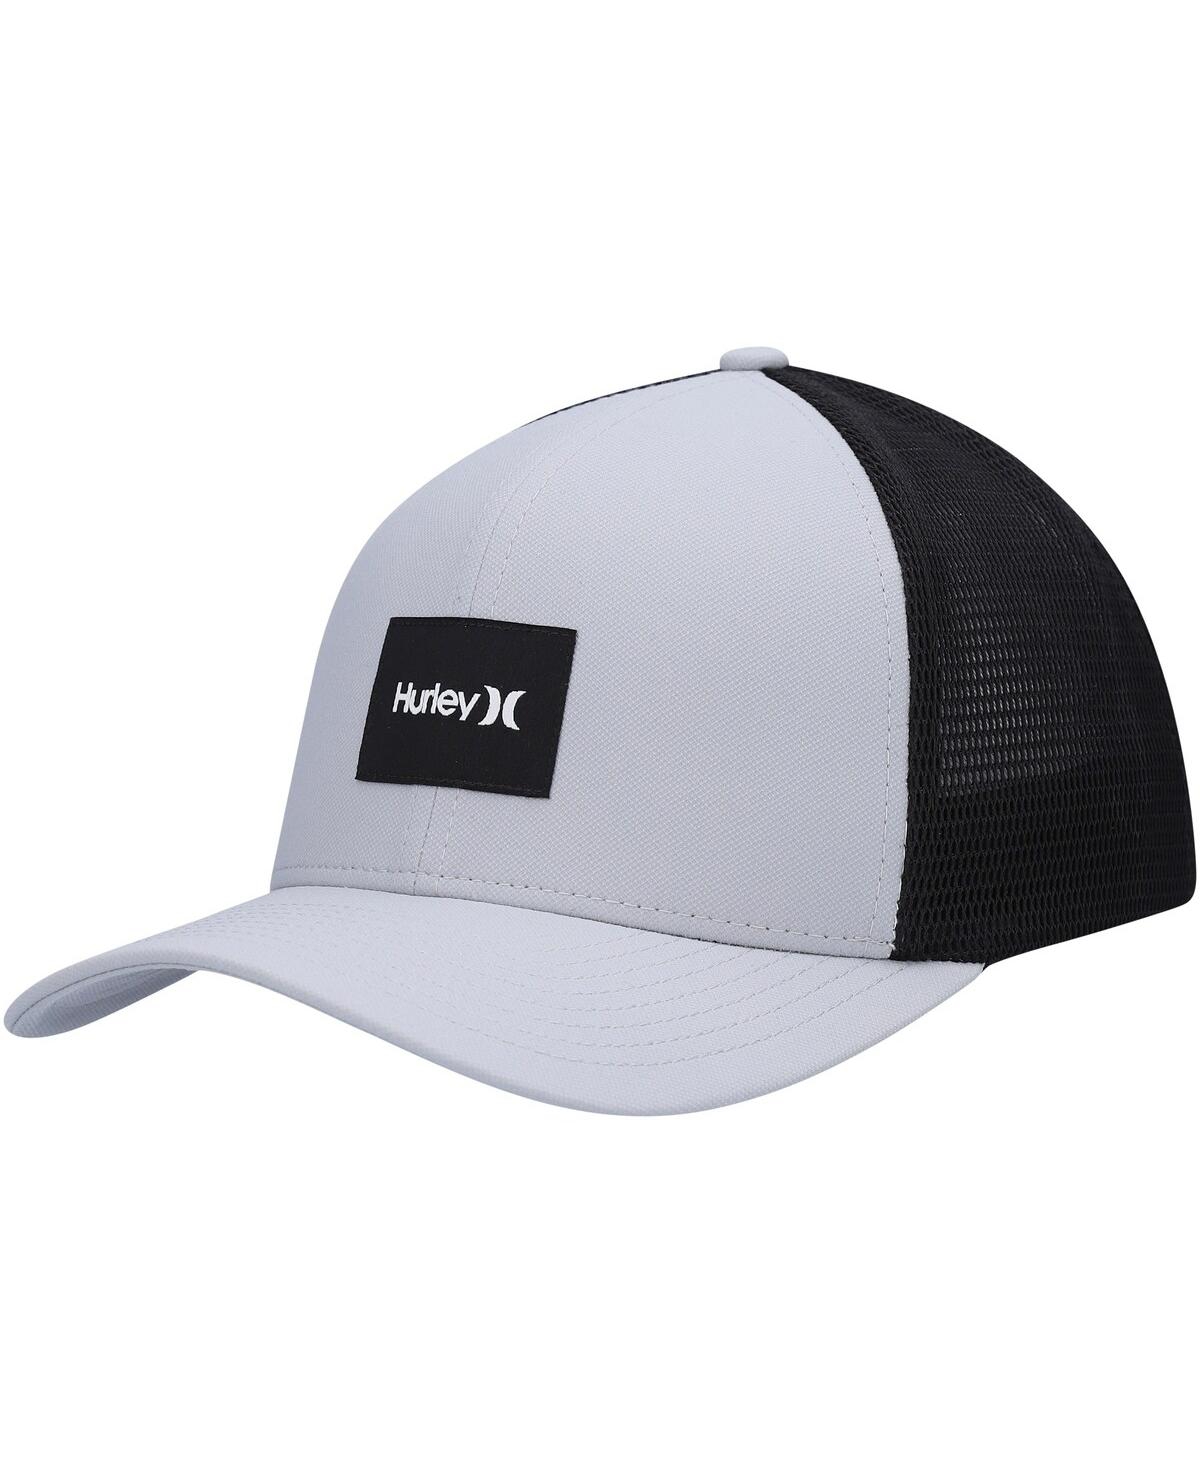 Hurley Men's  Gray Warner Trucker Snapback Hat